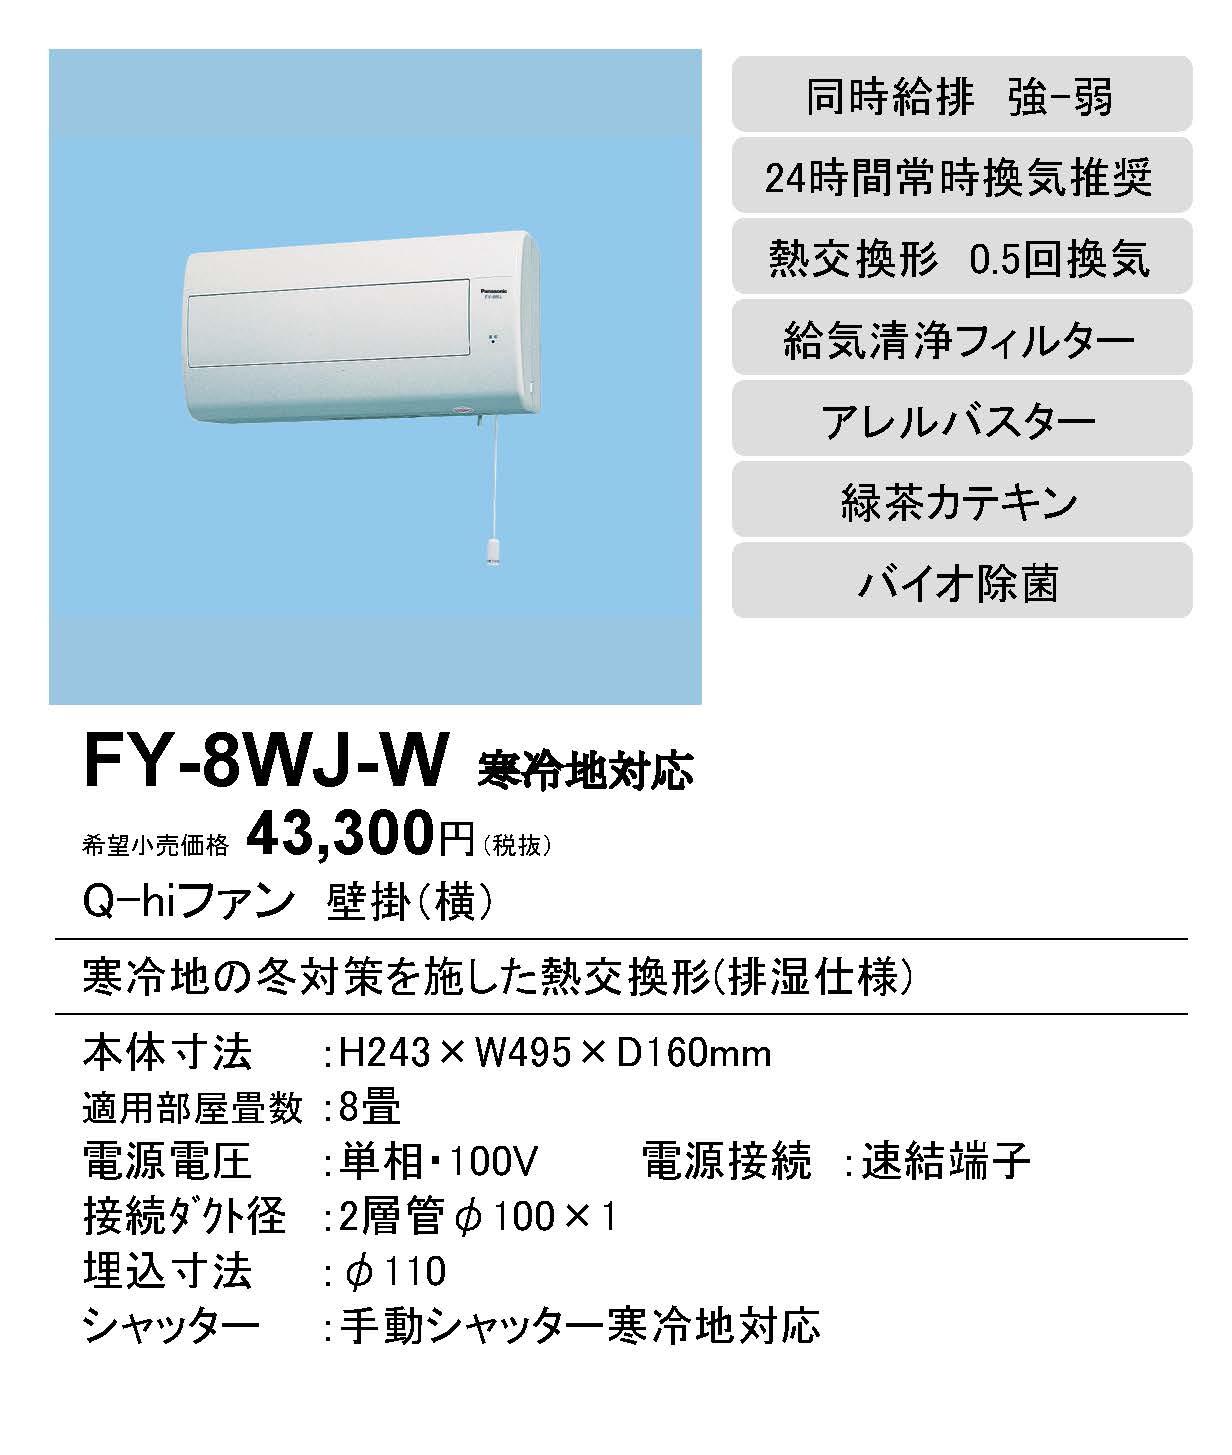 Panasonic パナソニック FY-8WJ-W Q-hiファン 壁掛形 1パイプ方式 熱交換形 寒冷地用 居室用 排湿形(0.5回/h 換気用)8 畳用 強制同時給排 強 弱 手動式シャッター